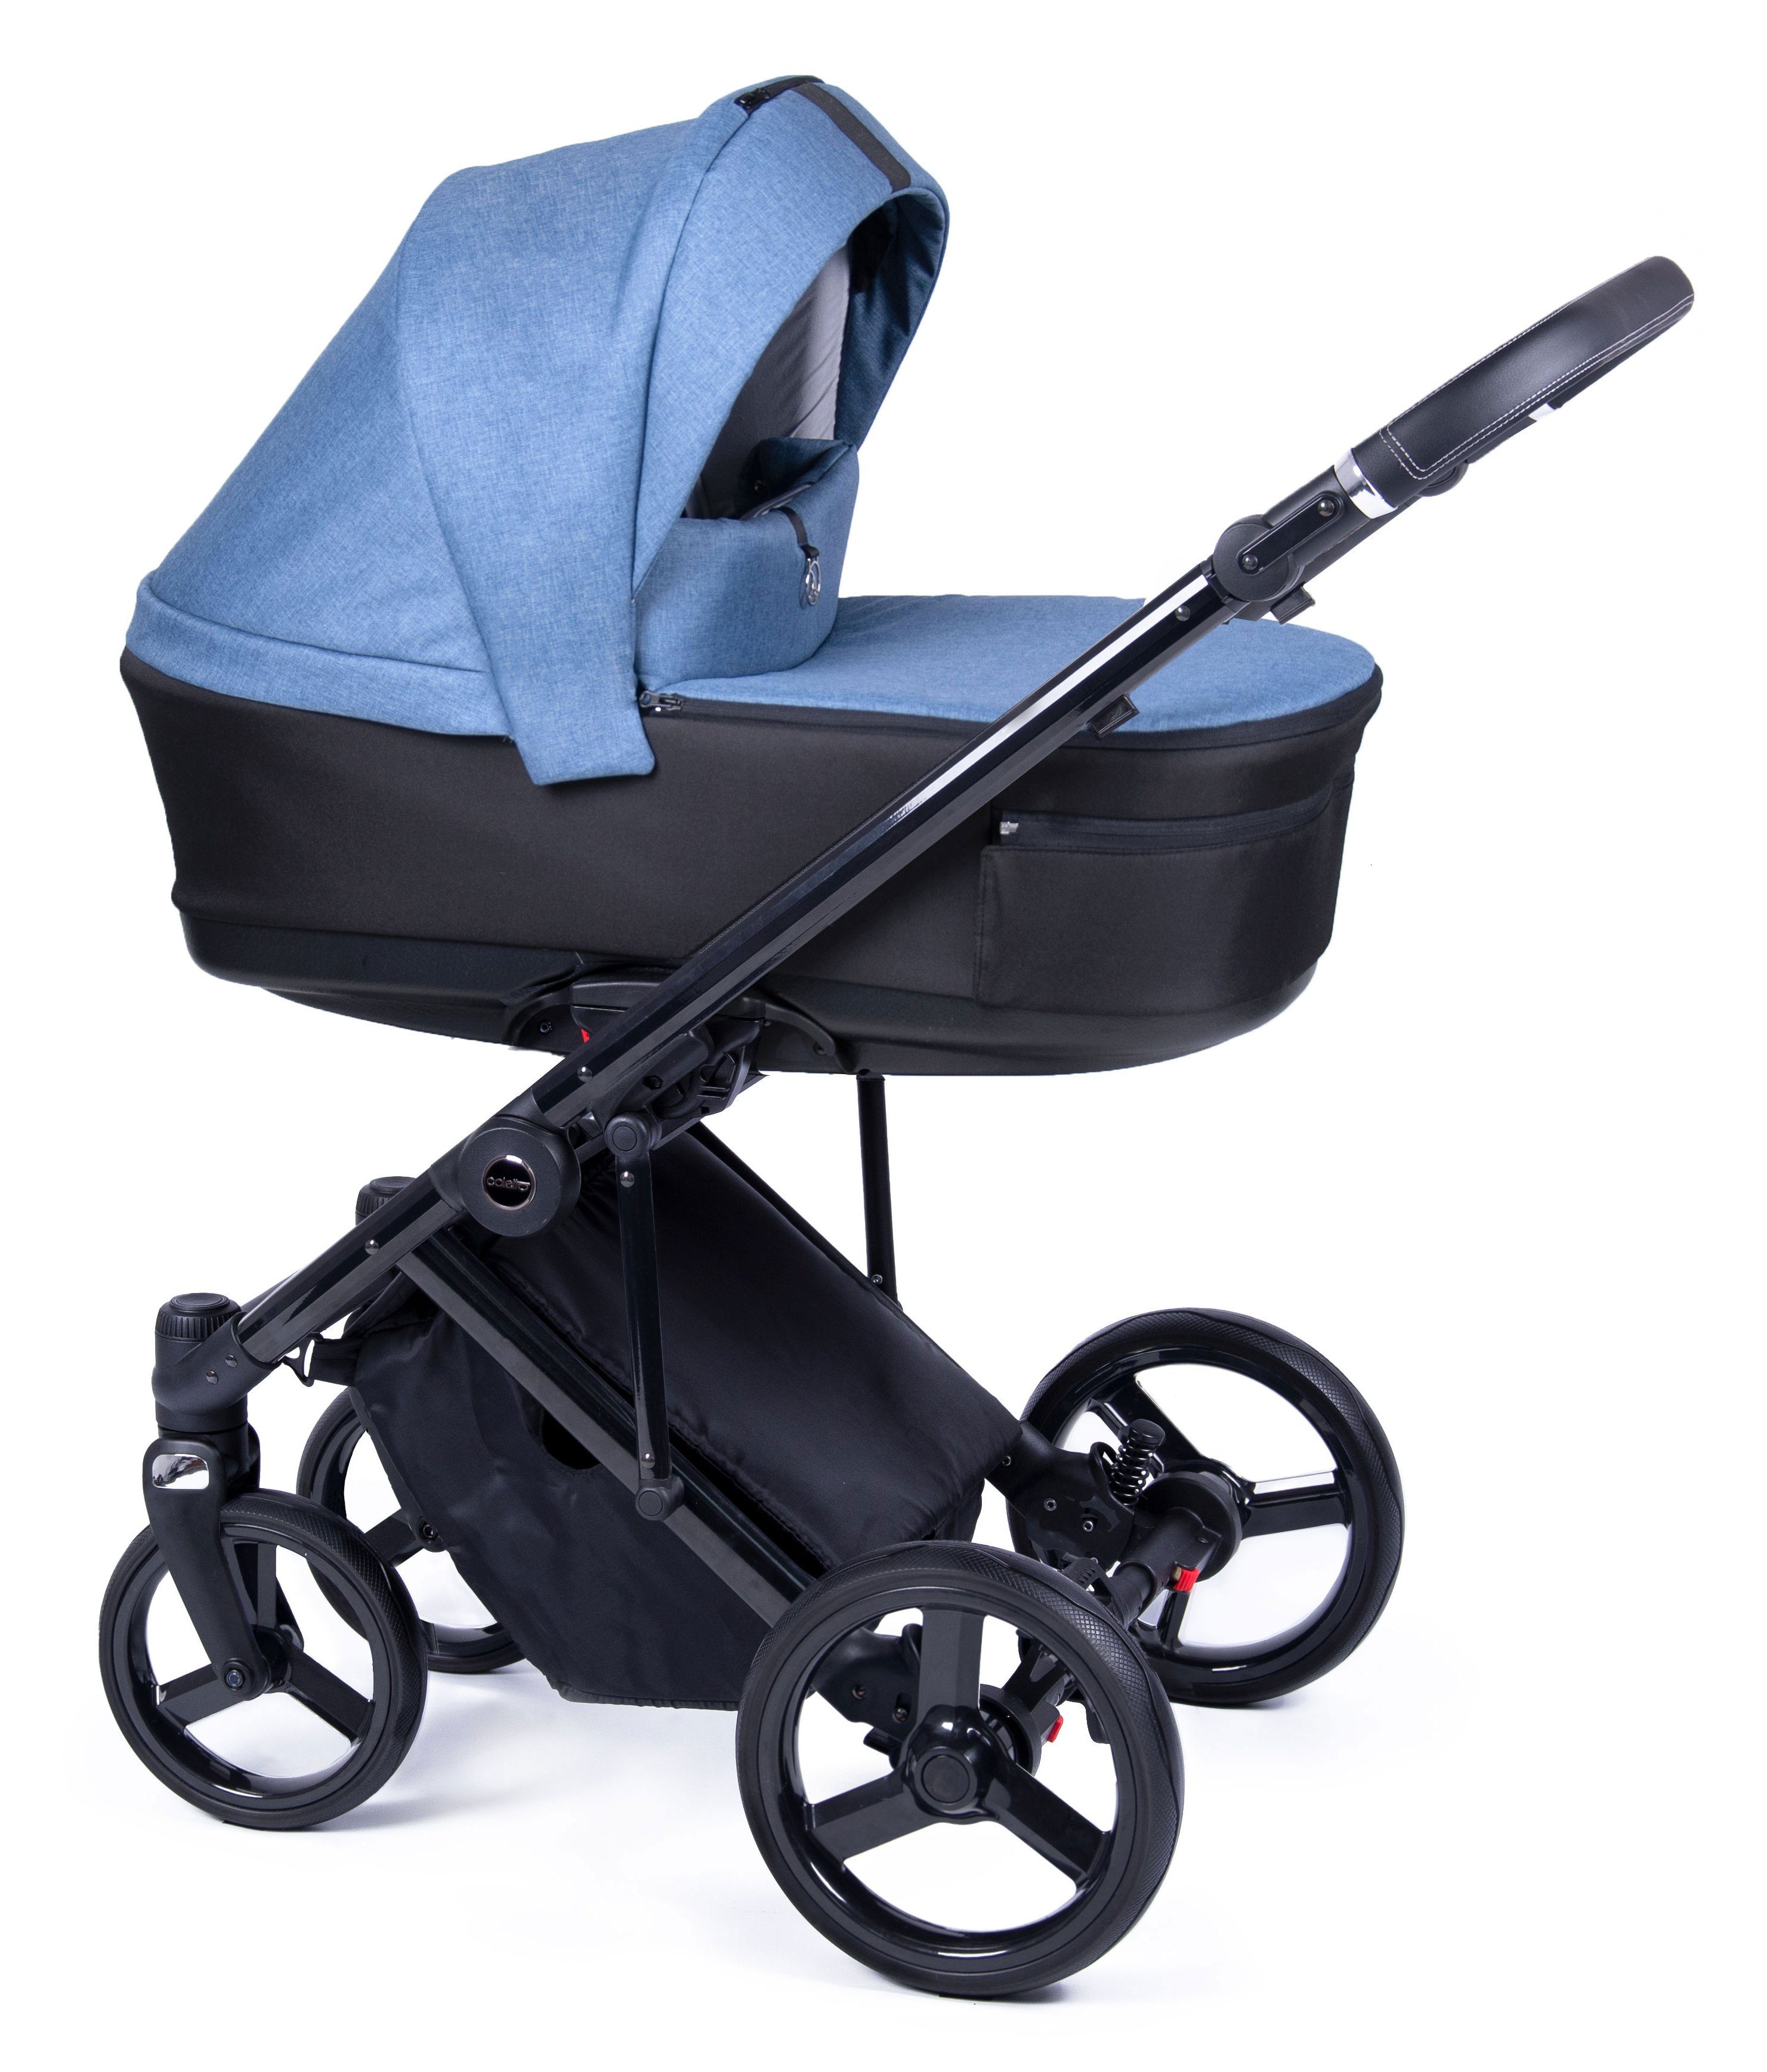 Gestell Blau 1 3 Fado schwarz 24 - 15 babies-on-wheels Teile Kinderwagen-Set Designs in Kombi-Kinderwagen - = in